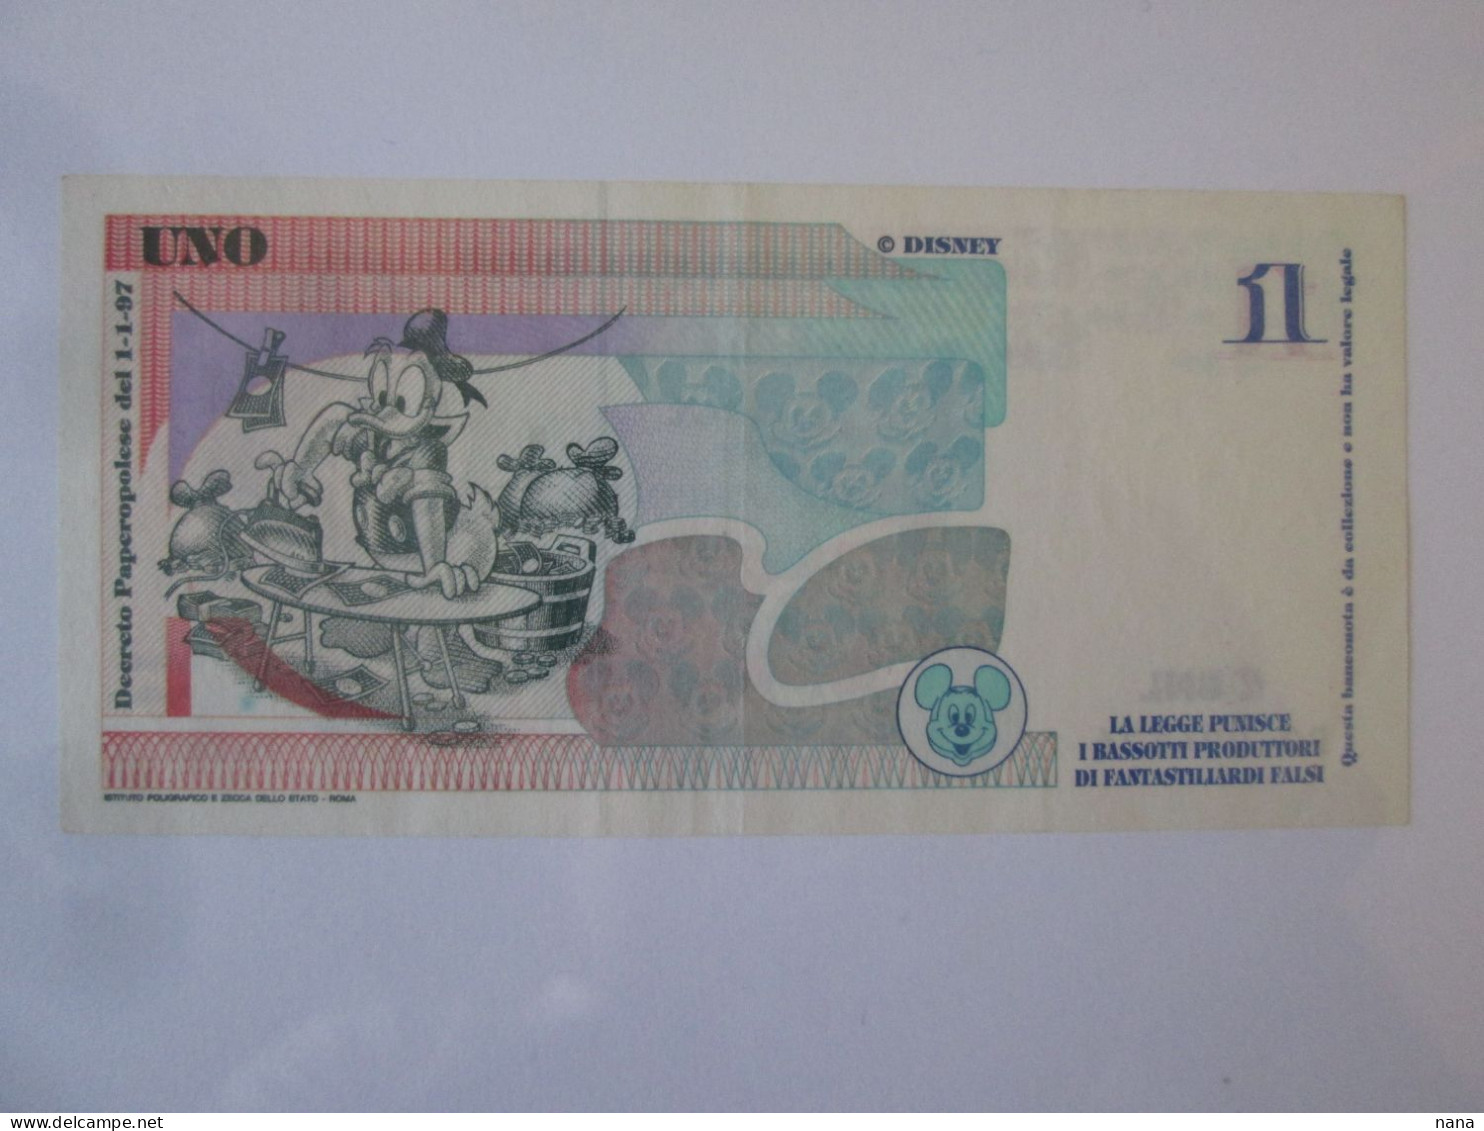 Rare! Italy 1 Billion Disney Paper Bank-Donald Duck 1997/1 Milliard Banque De Papier Disney-Canard Donald 1997 - [ 9] Collections